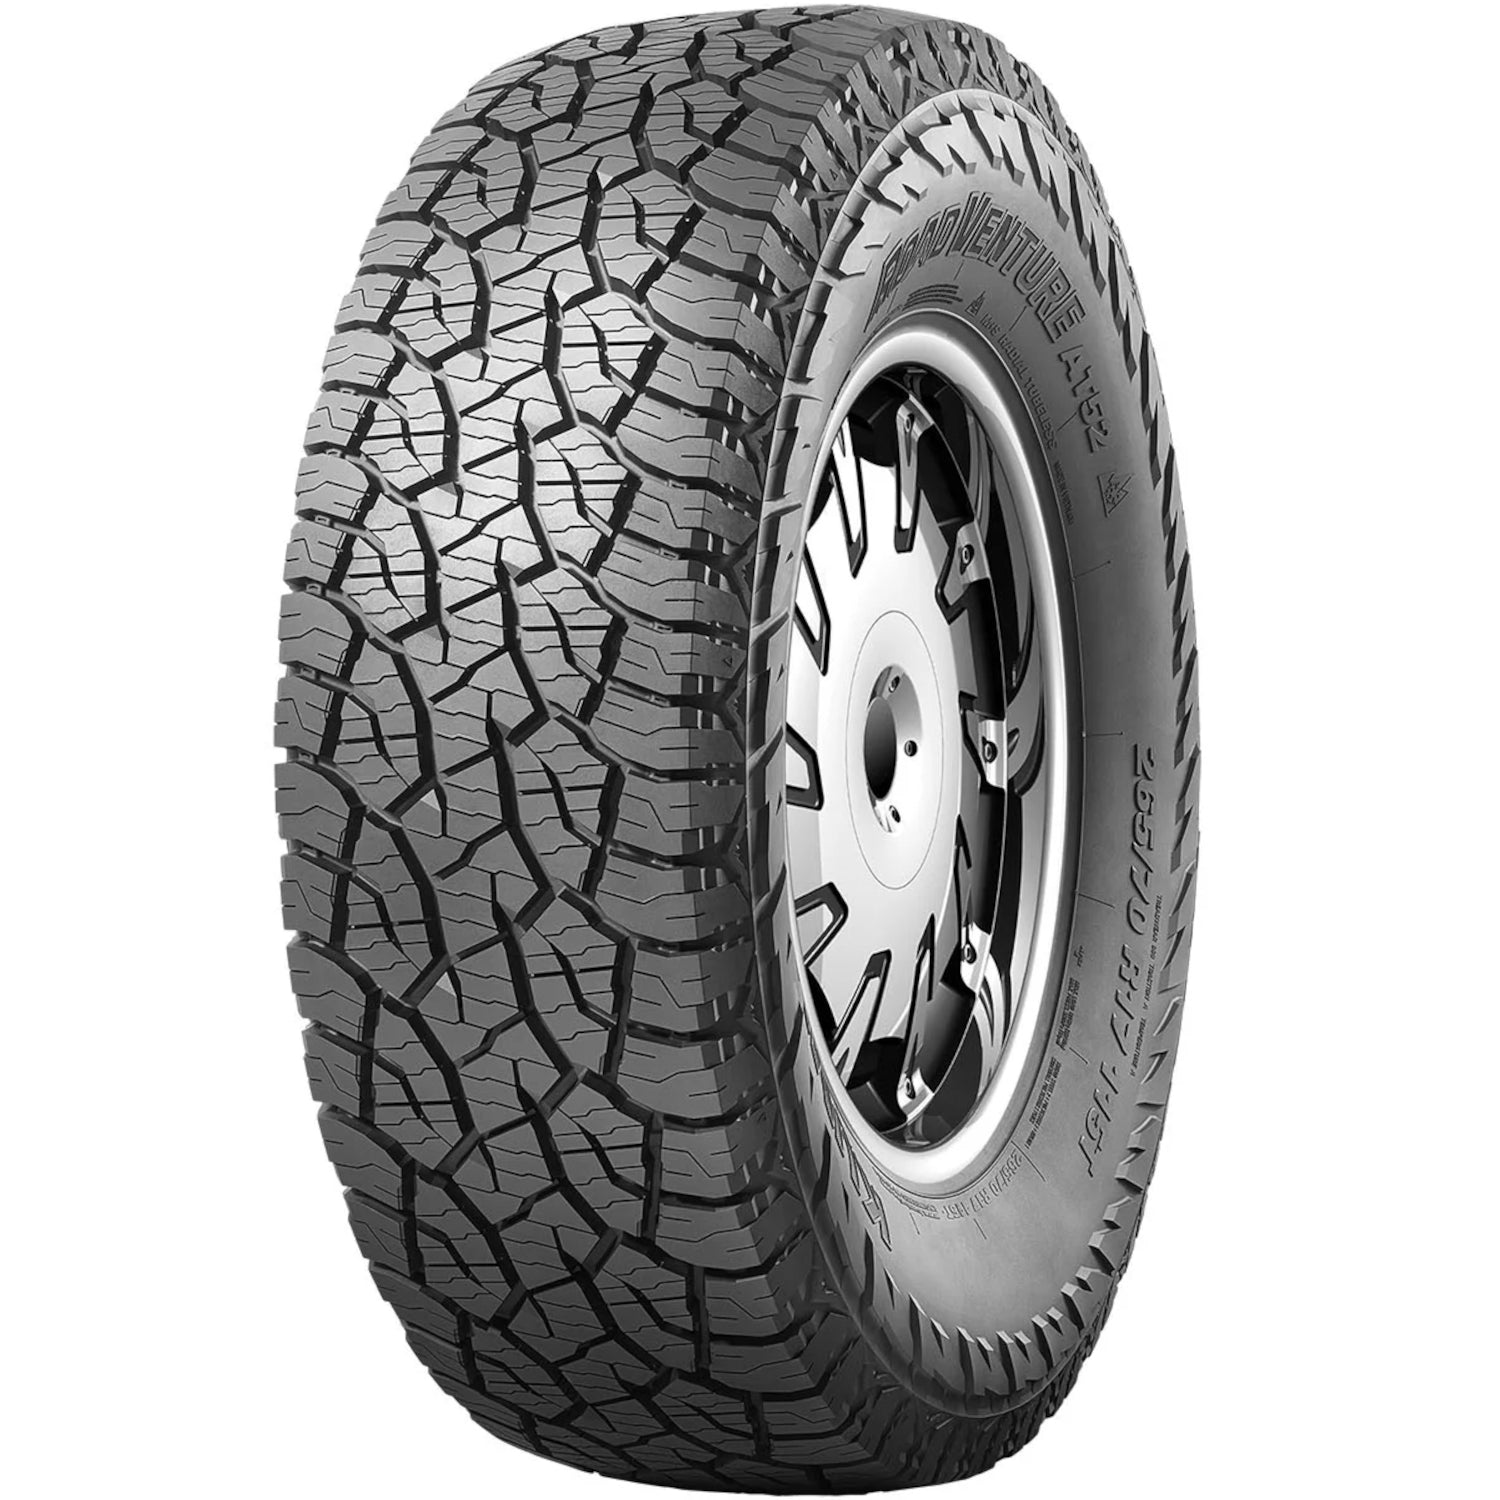 KUMHO ROAD VENTURE AT52 LT225/75R16 (29.3X8.9R 16) Tires